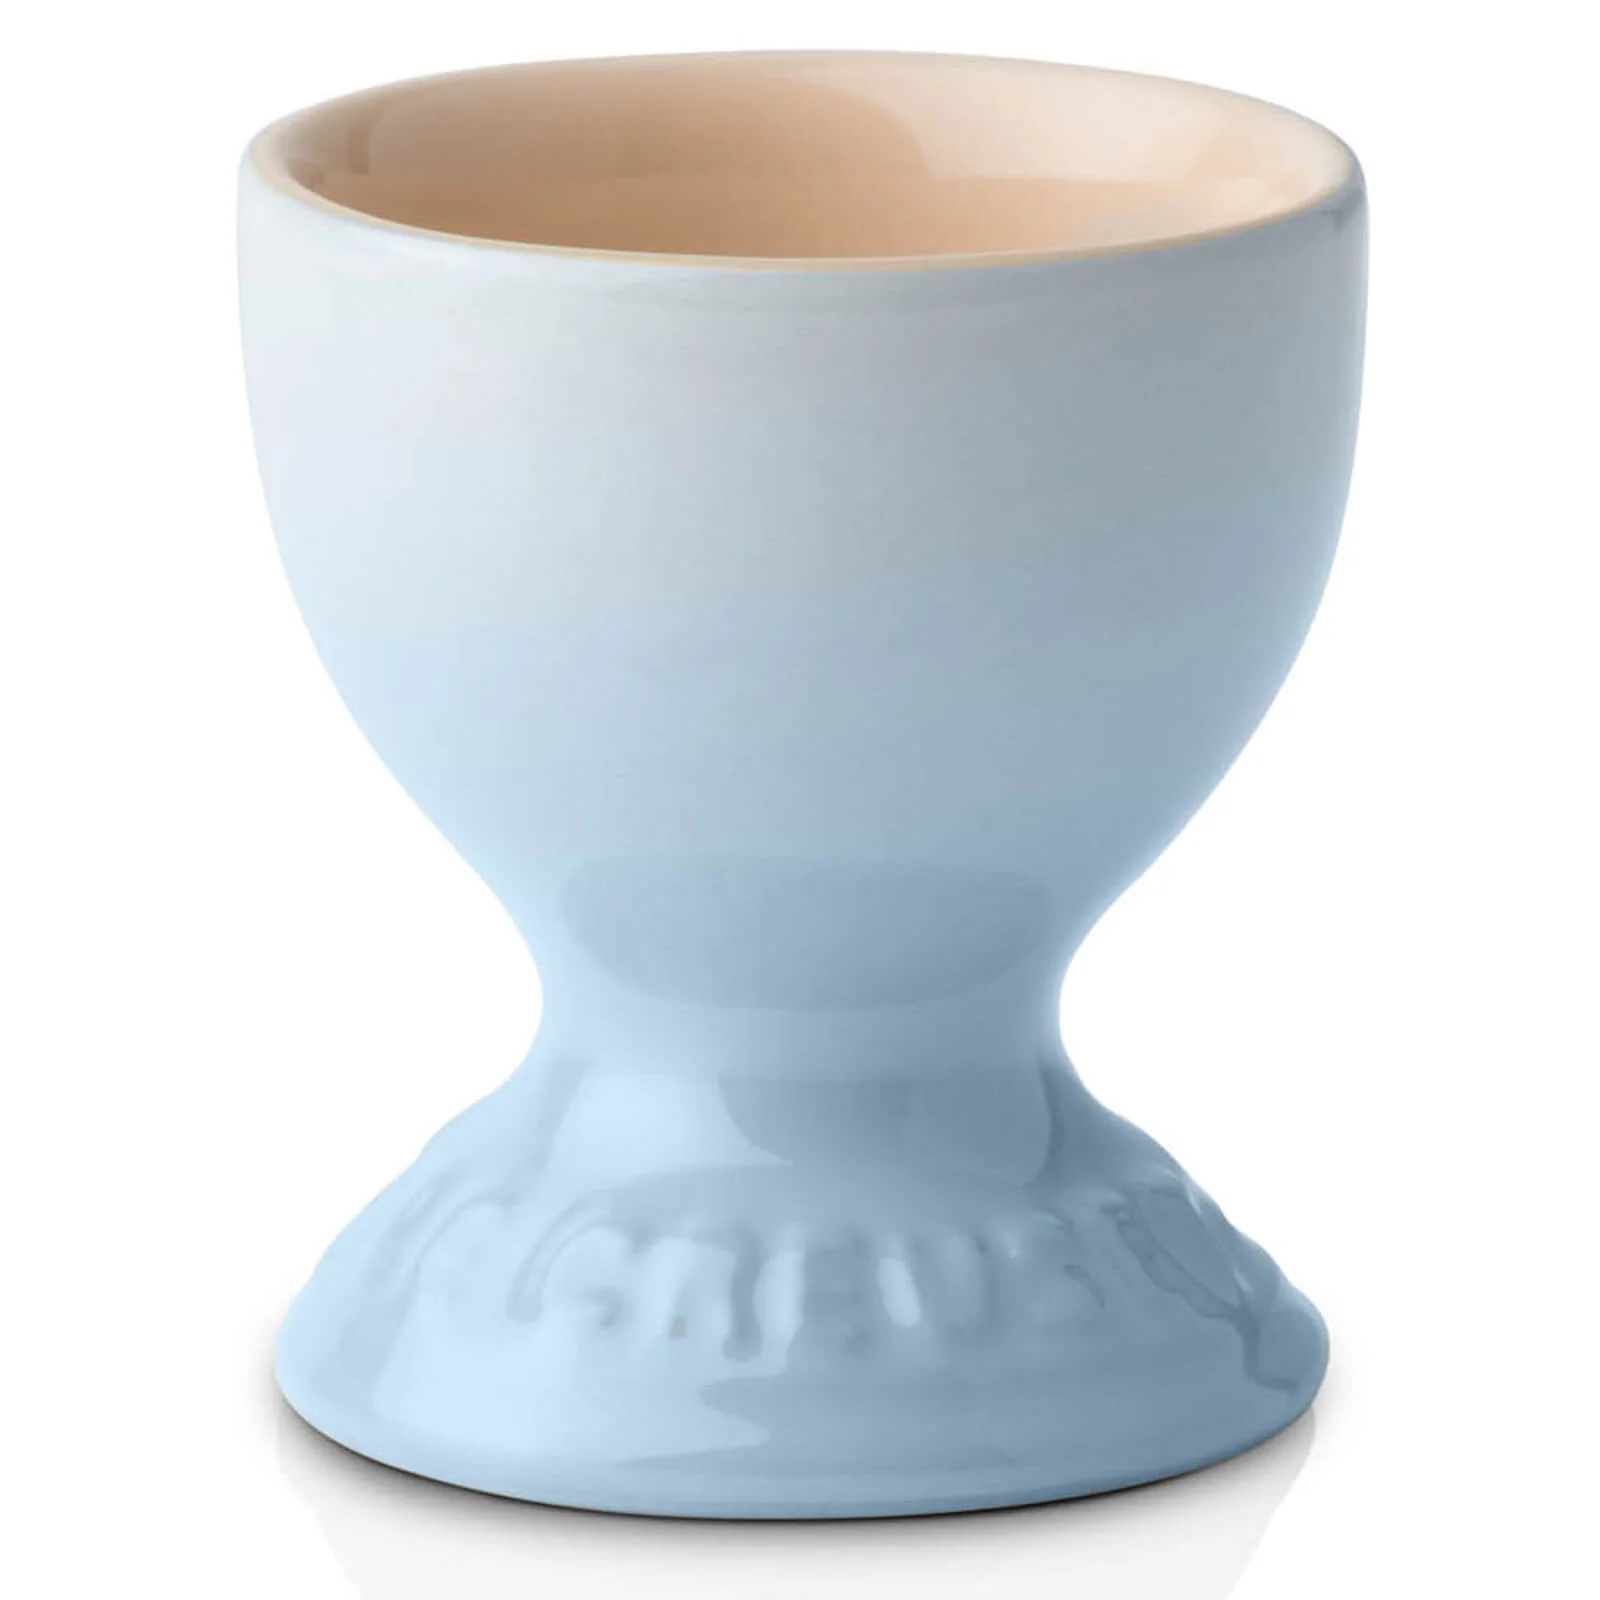 Le Creuset Stoneware Egg Cup - Coastal Blue Image 1